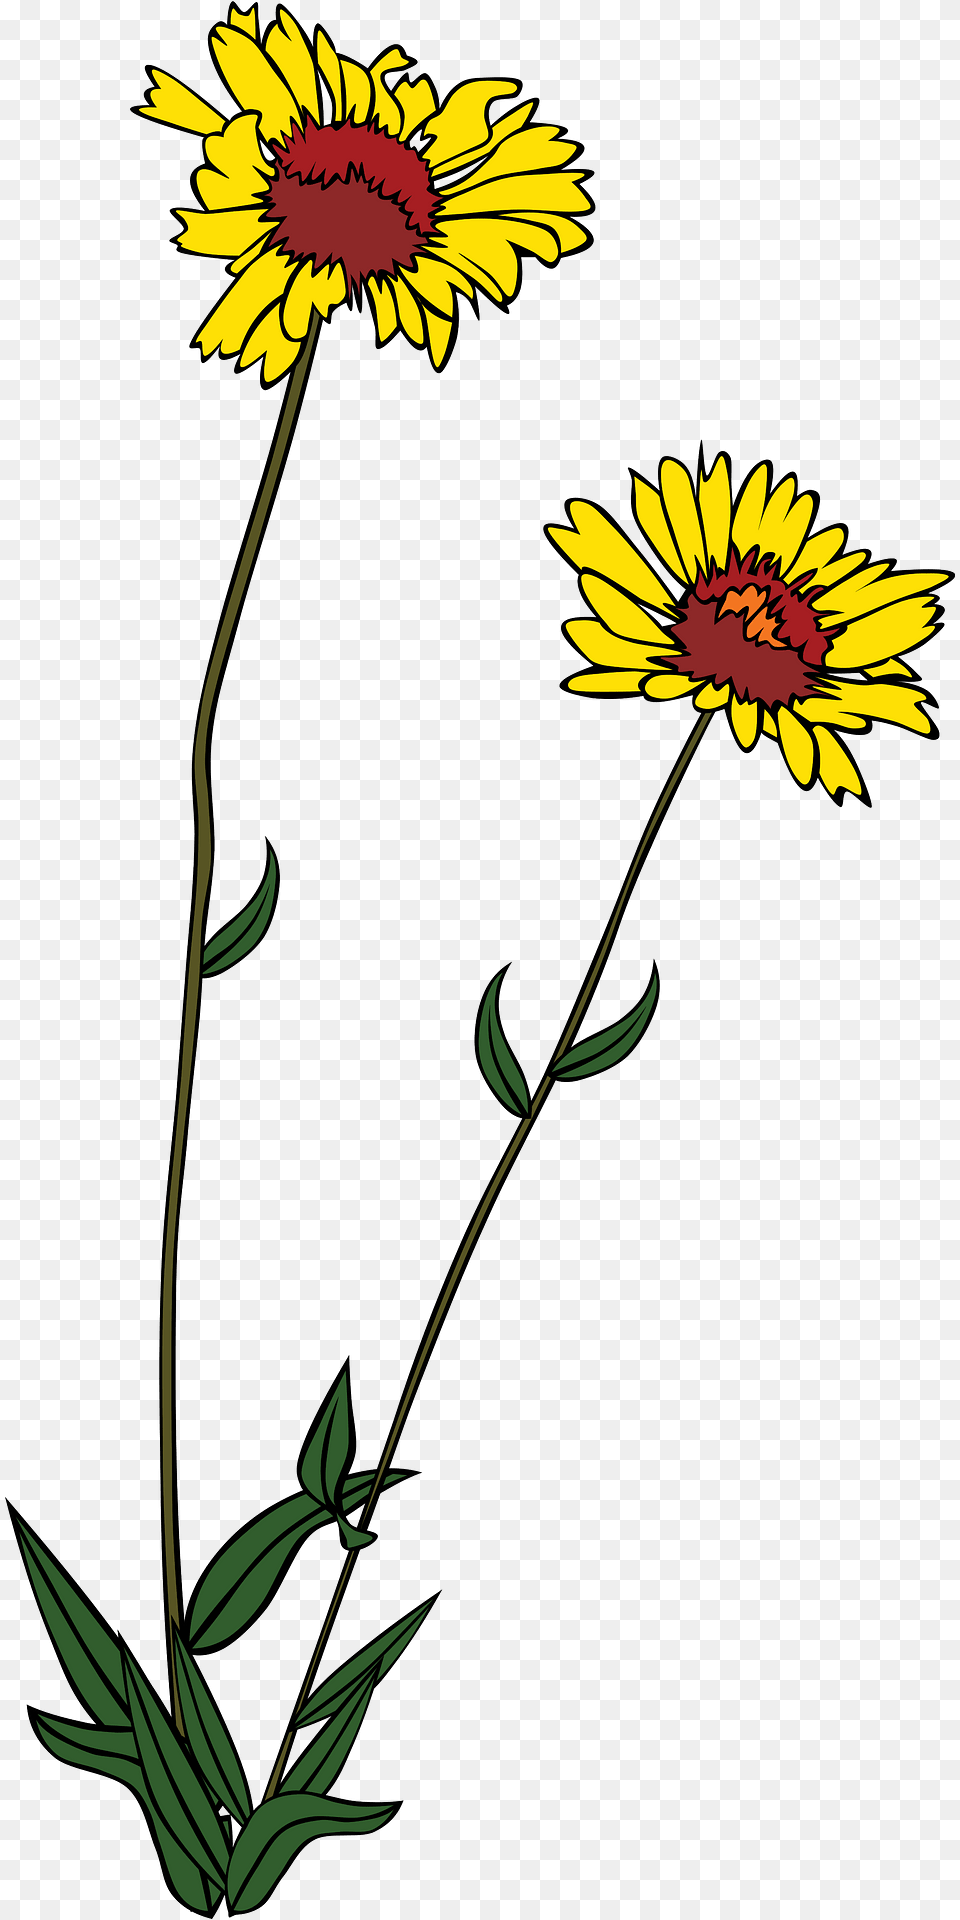 Gaillardia Aristata Blanketflower Of Sunflower Family Clipart, Daisy, Flower, Plant, Petal Free Transparent Png